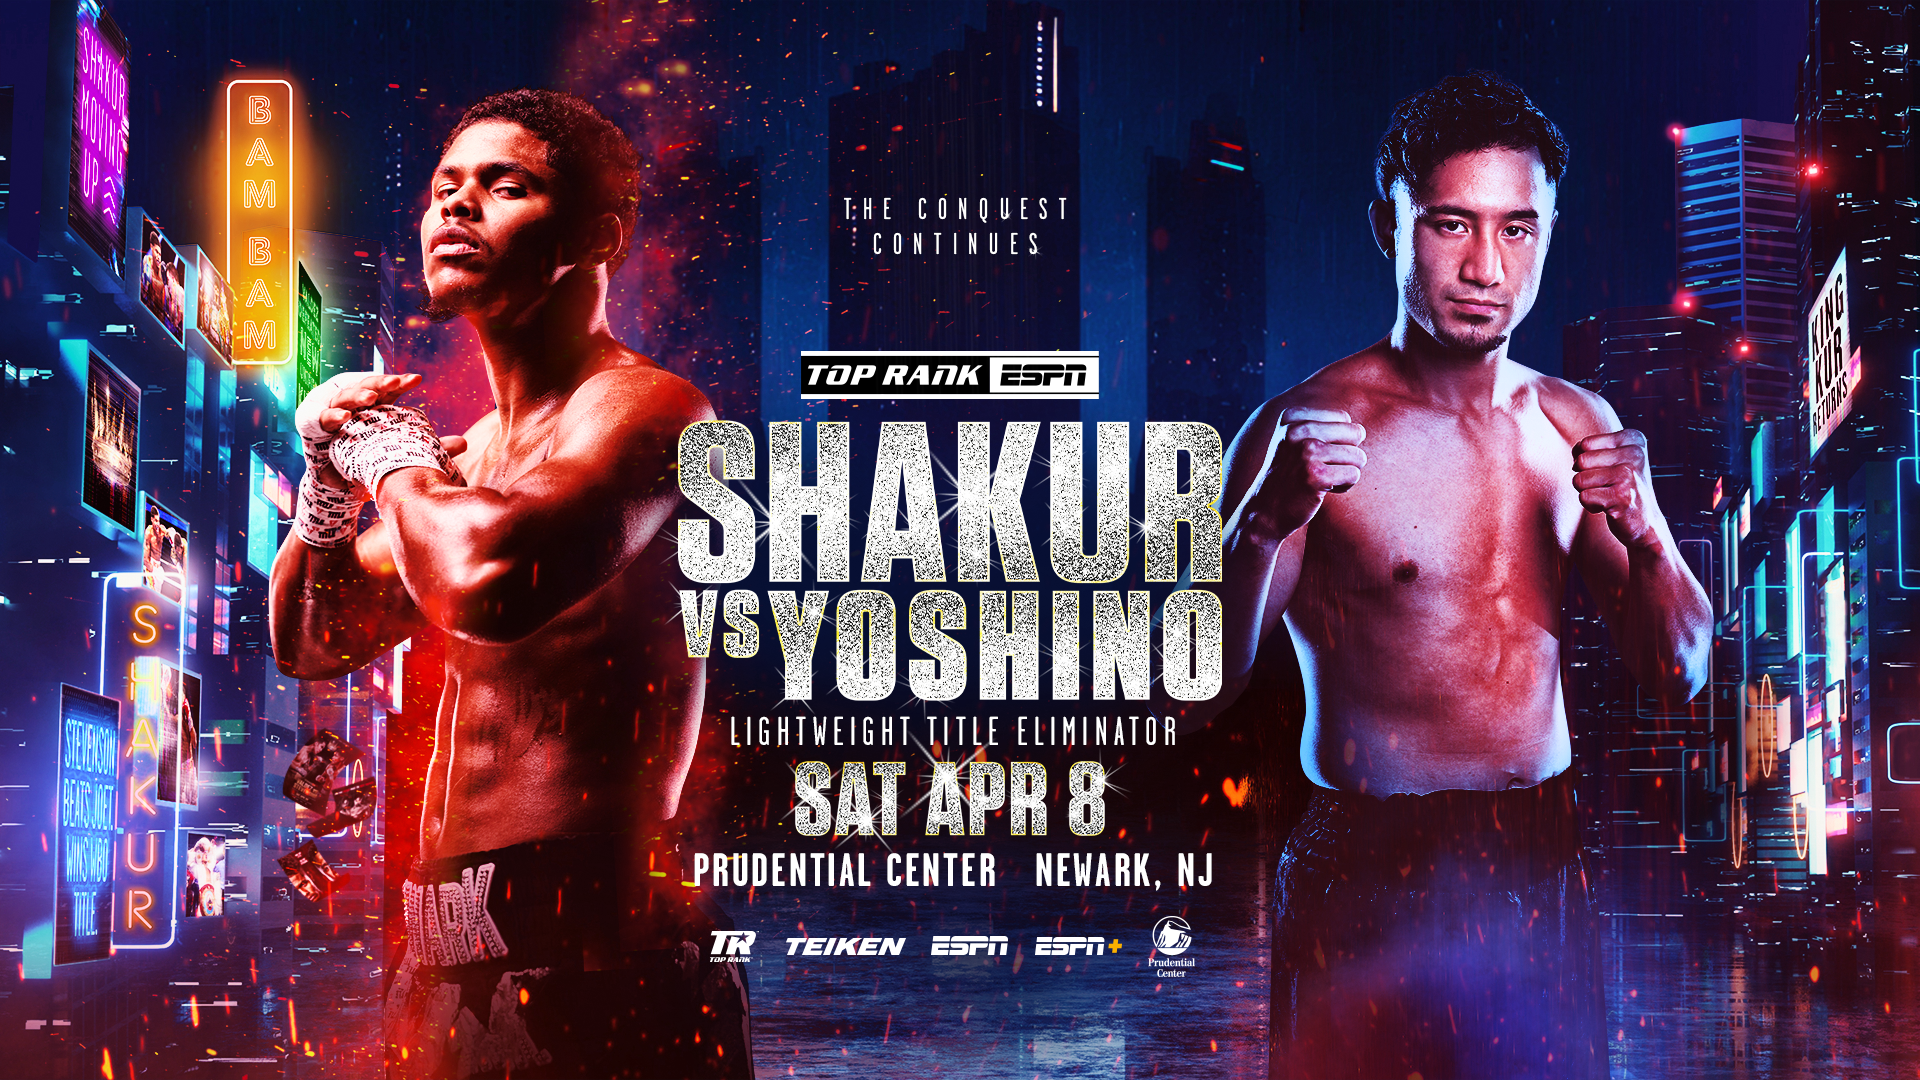 The King of Brick City: Shakur Stevenson Returns Home April 8 Against Shuichiro Yoshino in Lightweight Main Event at Newark’s Prudential Center LIVE on ESPN